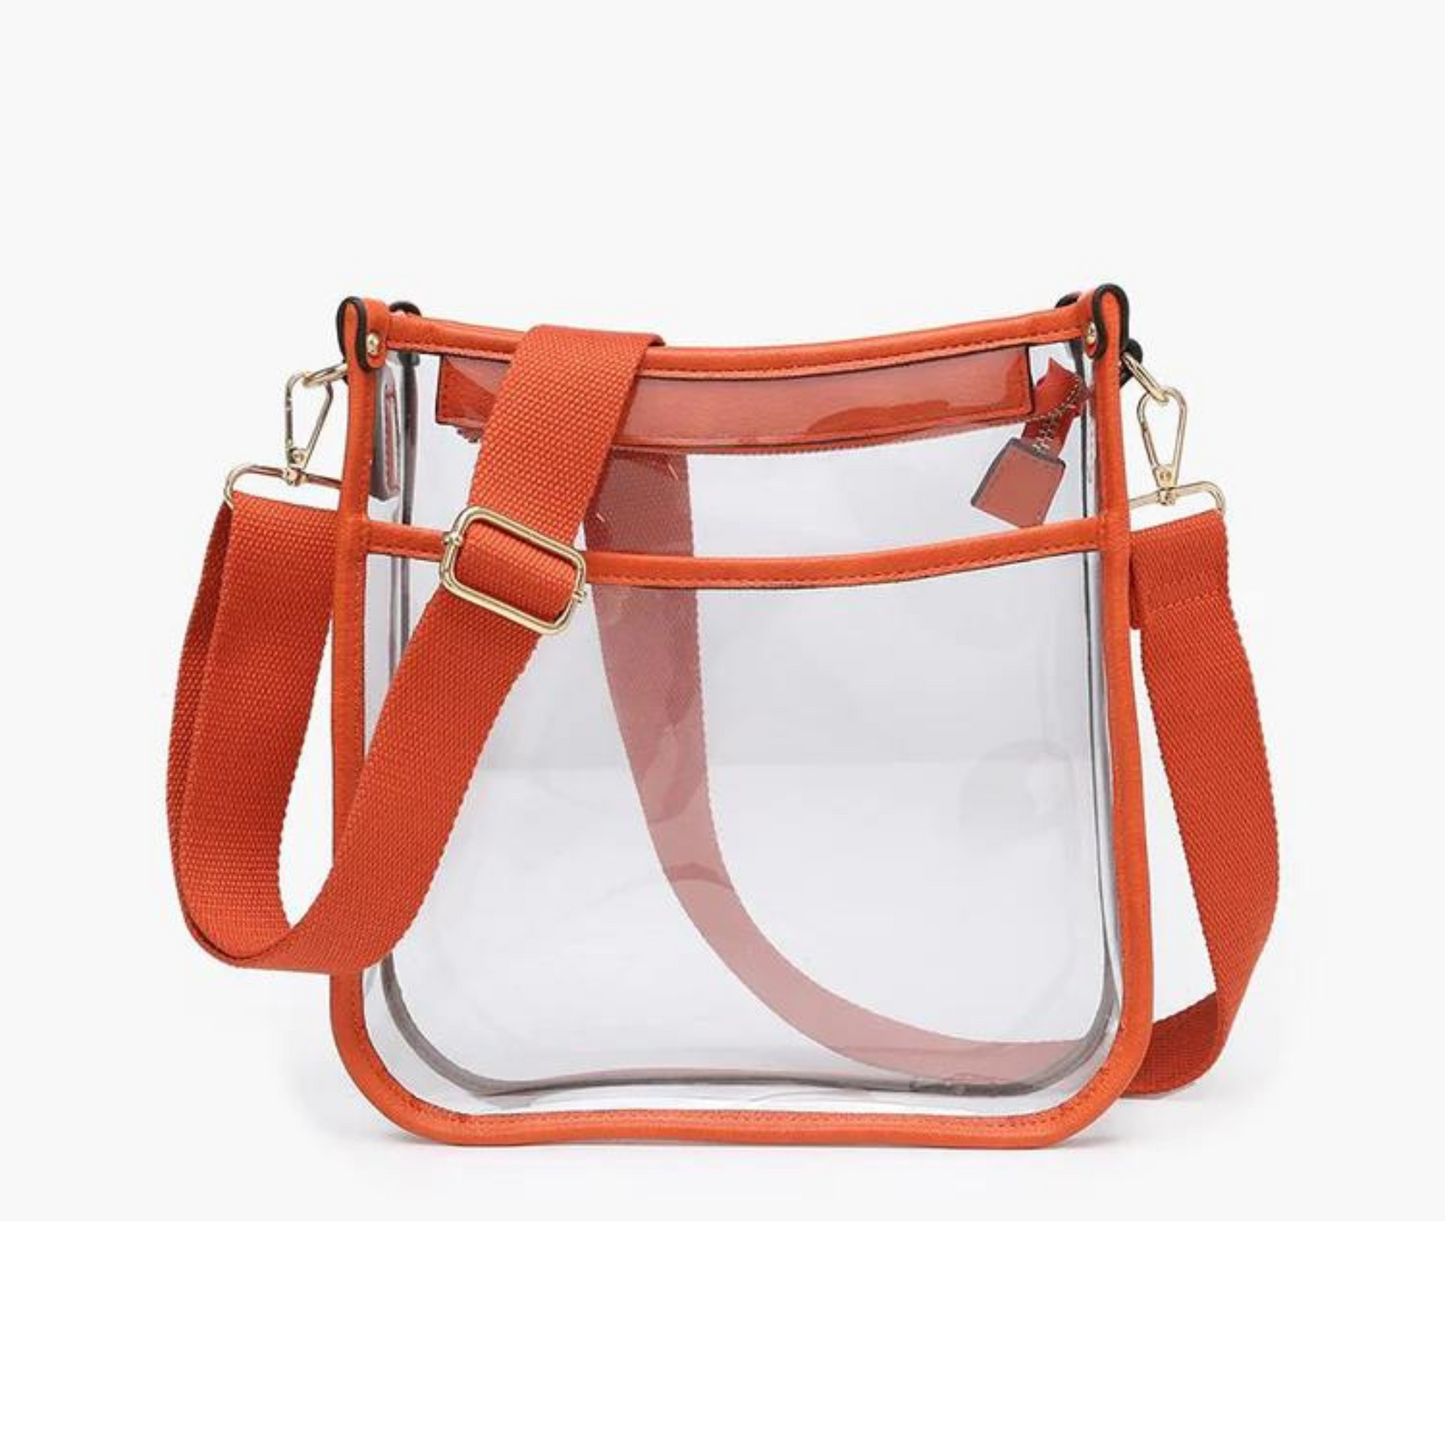 Posie clear crossbody purse in burnt orange